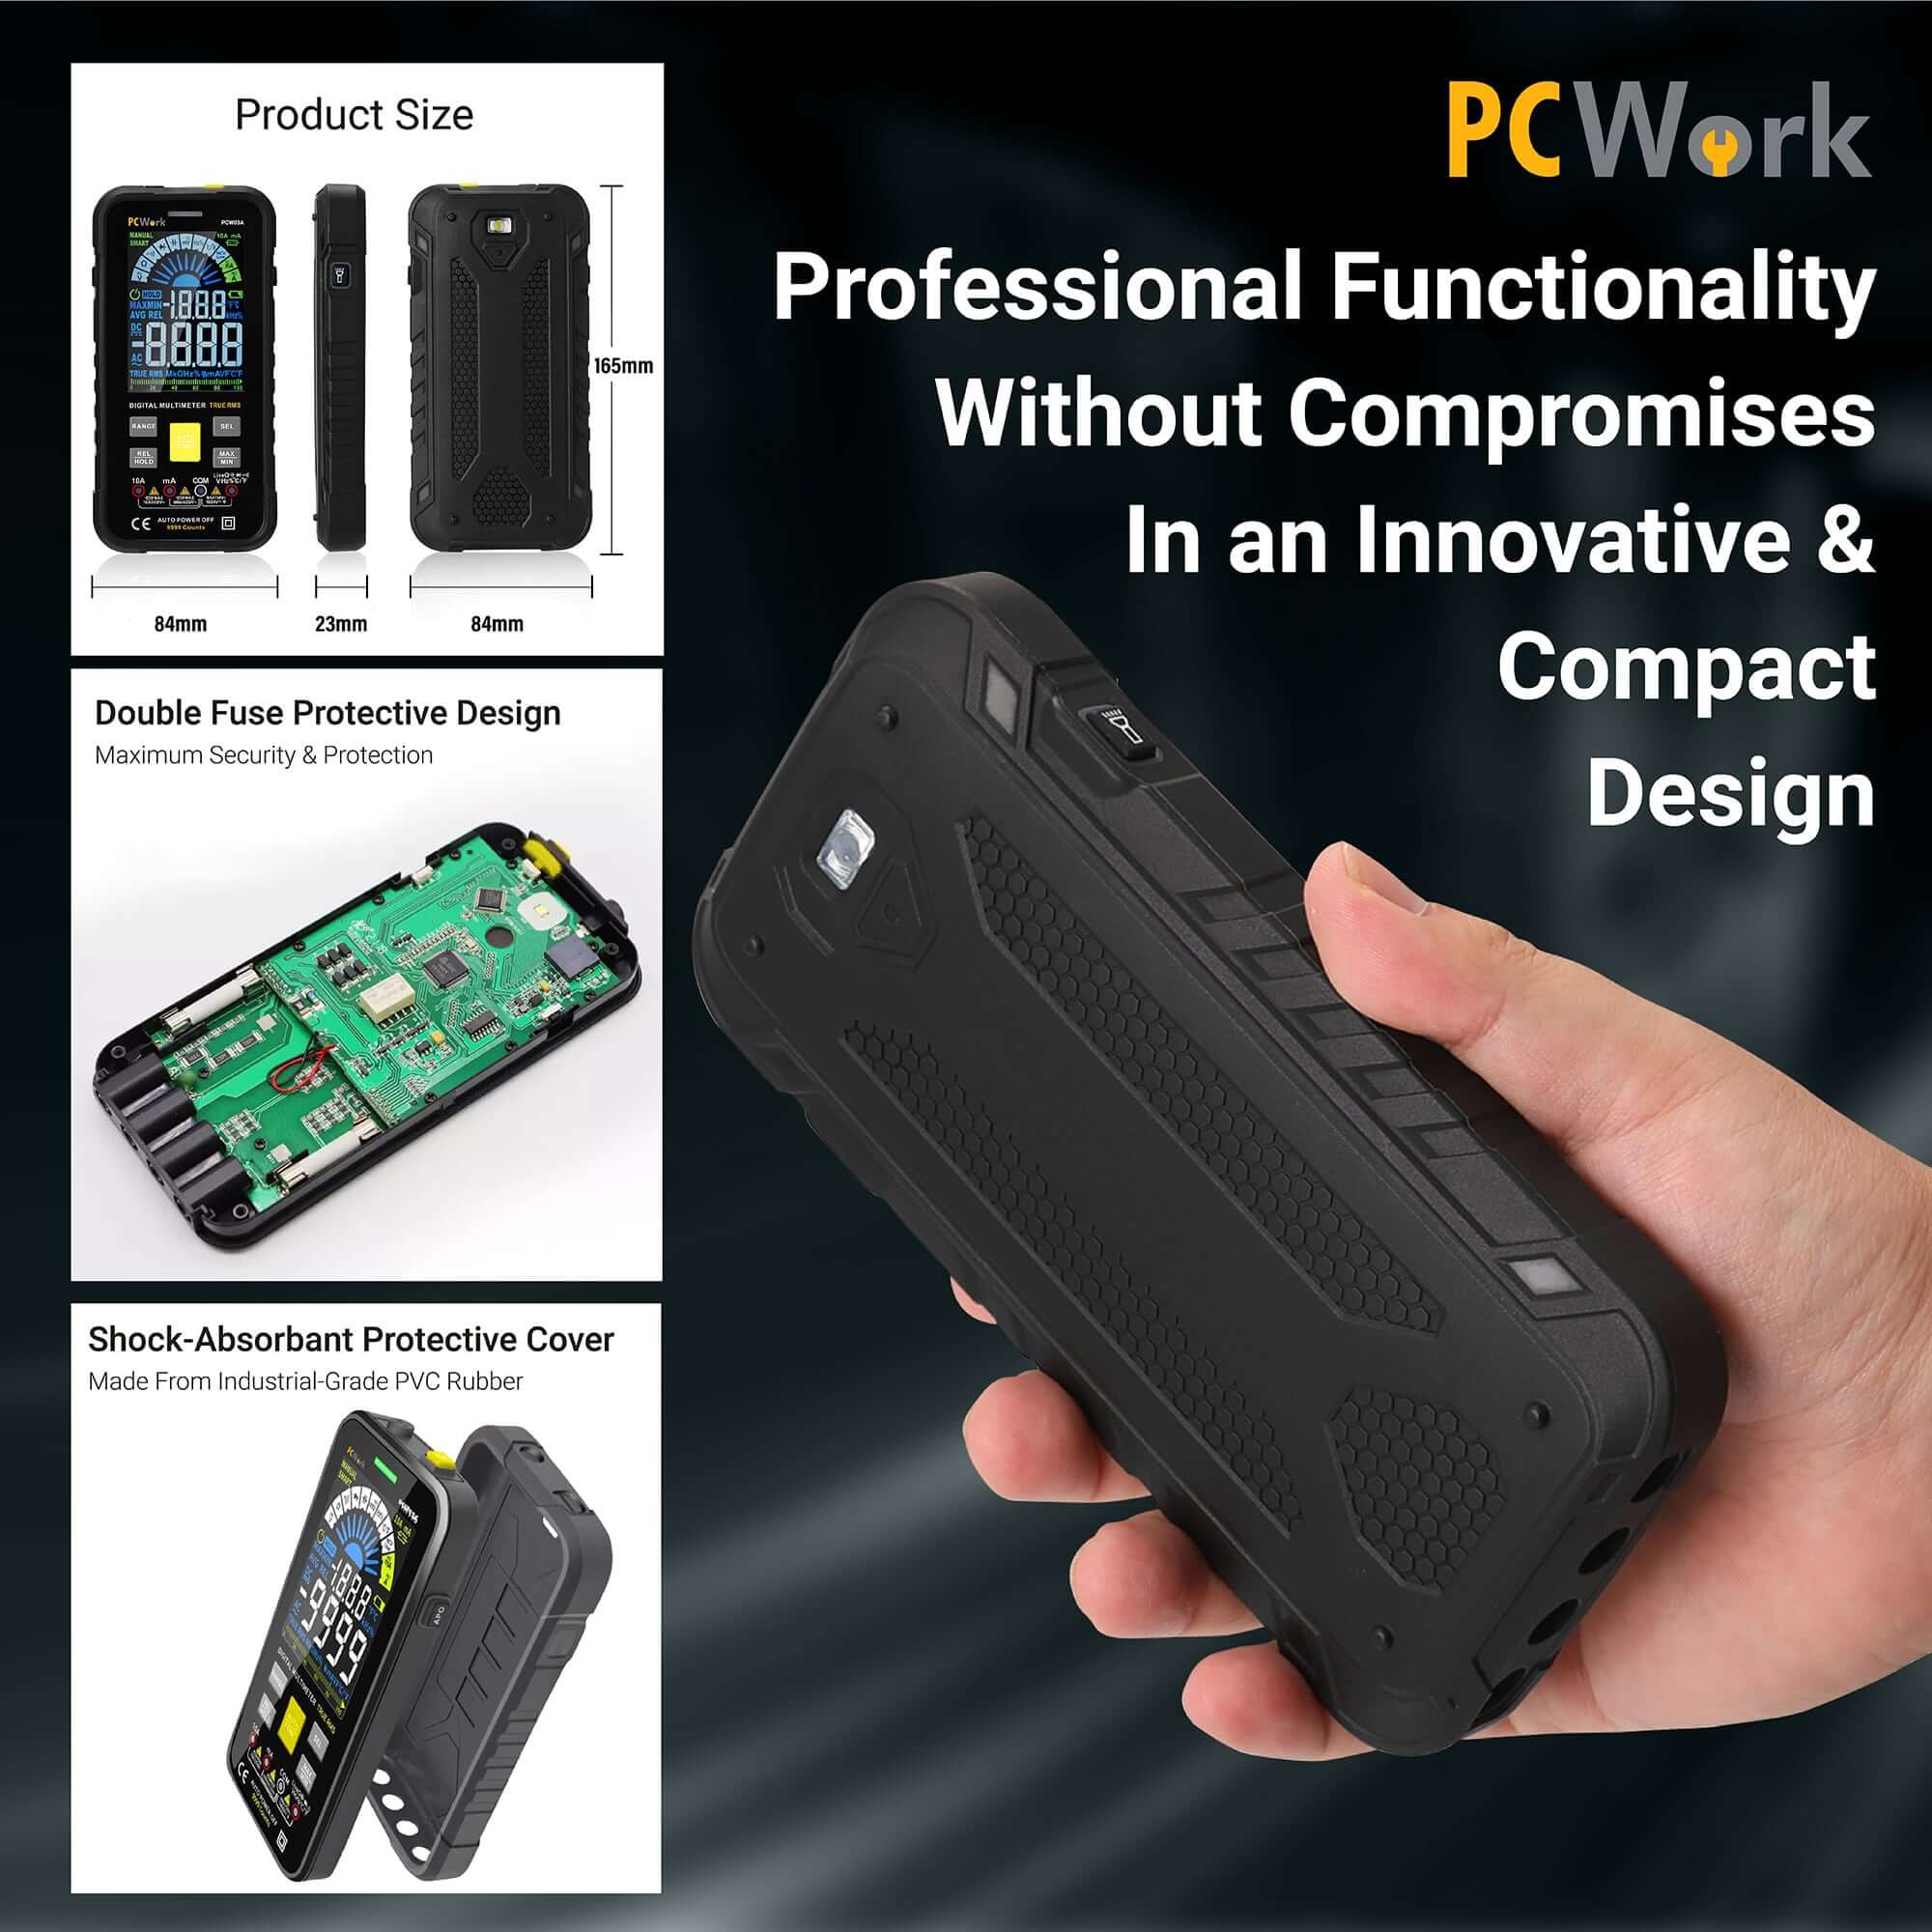 PCW03A Digital Multimeter, smart, True RMS